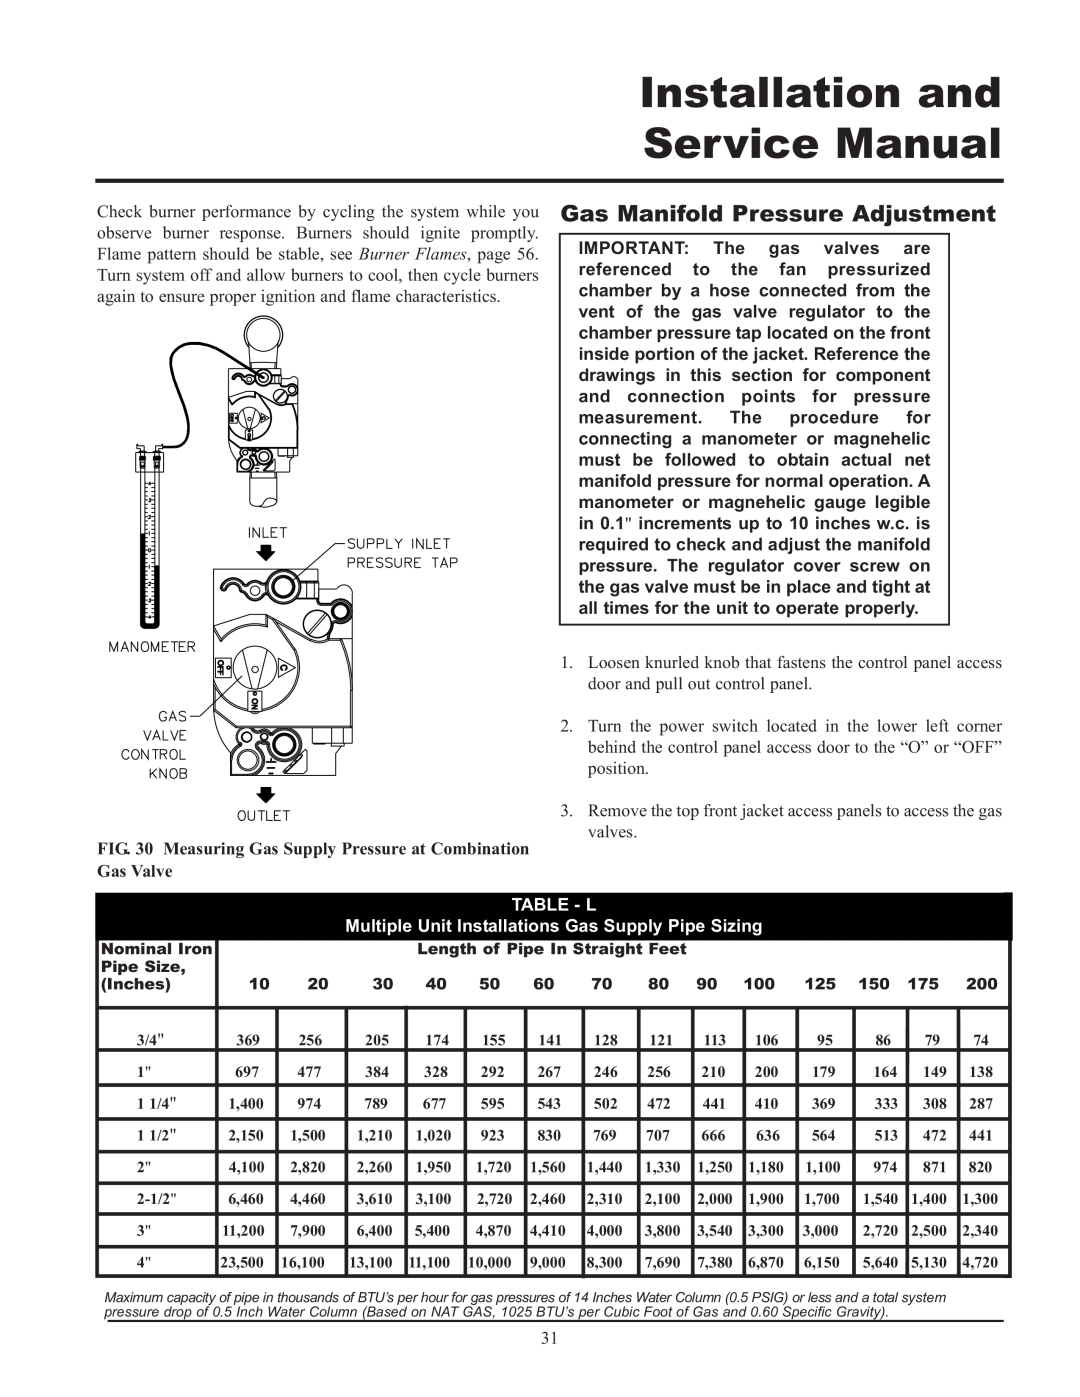 Lochinvar CF-CH(E)-i&s-08, 399 Gas Manifold Pressure Adjustment, Measuring Gas Supply Pressure at Combination Gas Valve 